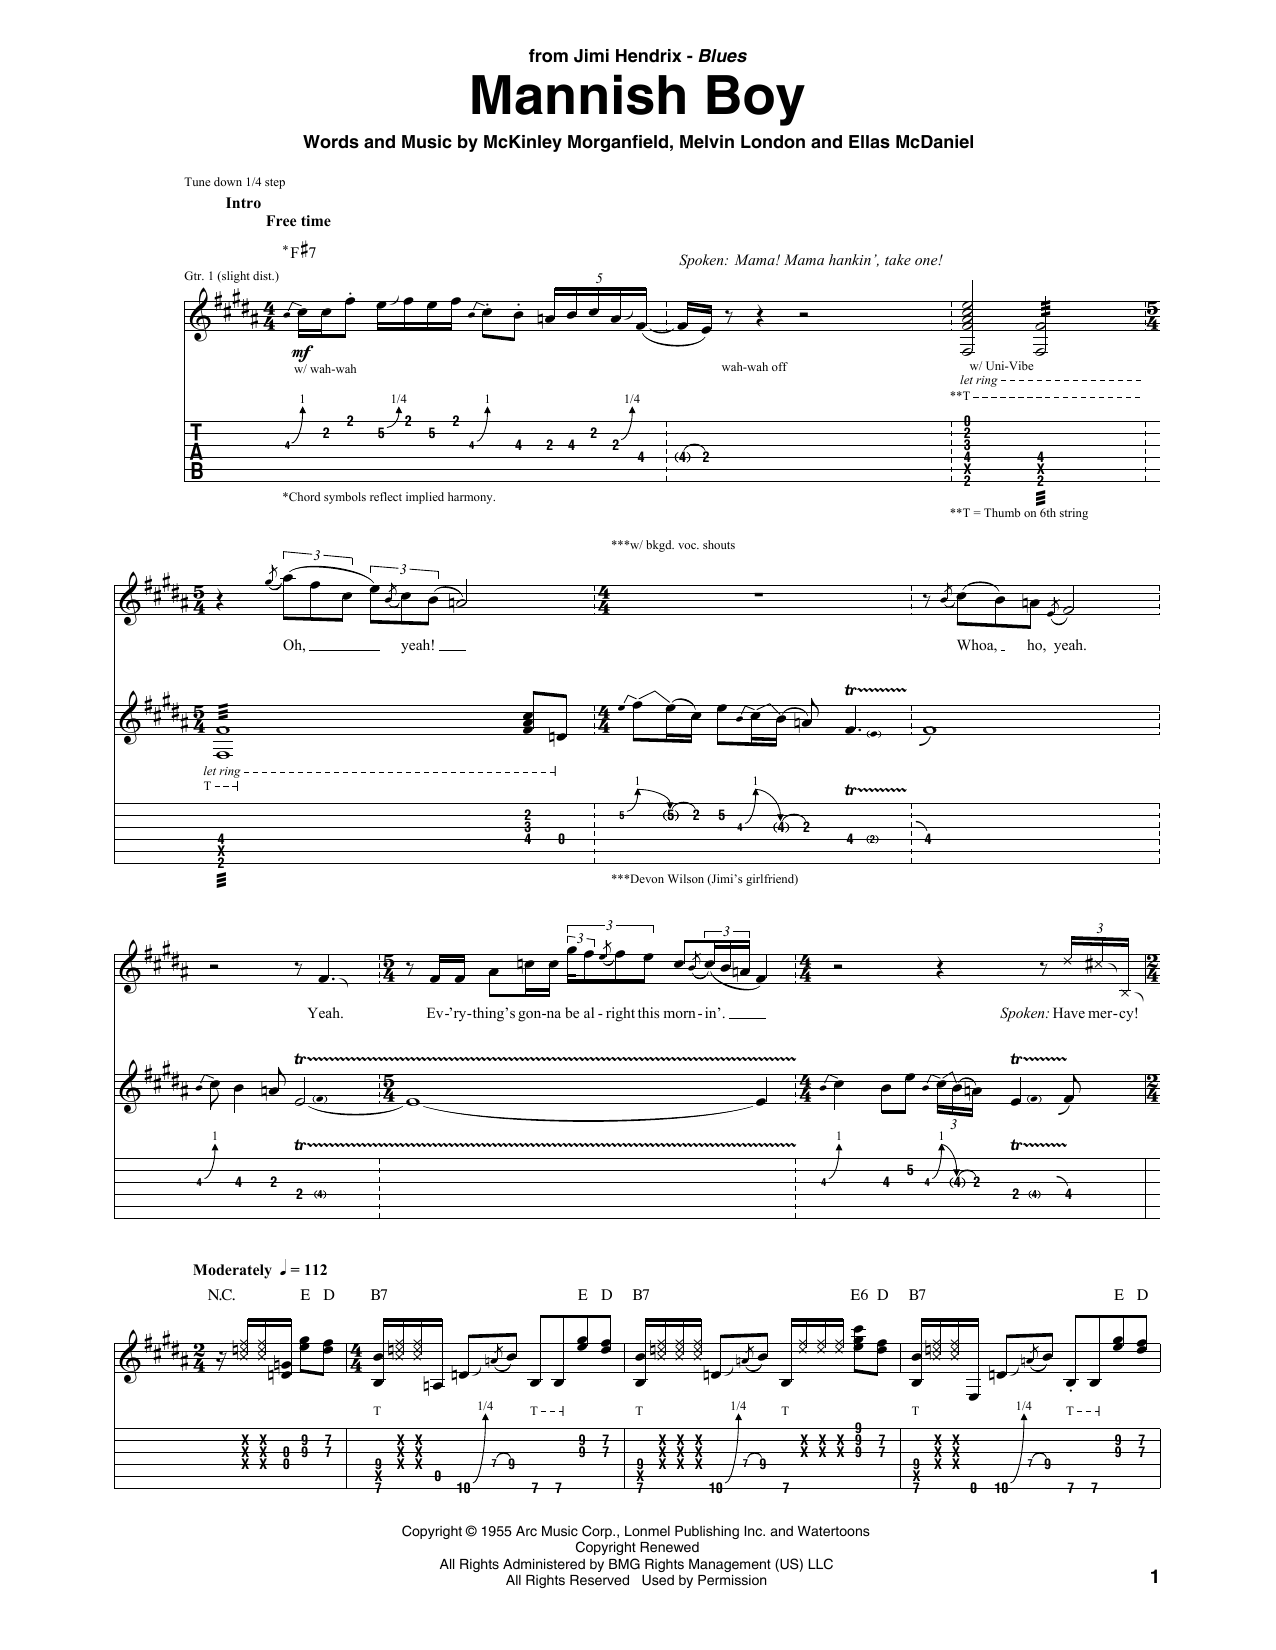 Jimi Hendrix Mannish Boy Sheet Music Notes & Chords for Bass Guitar Tab - Download or Print PDF